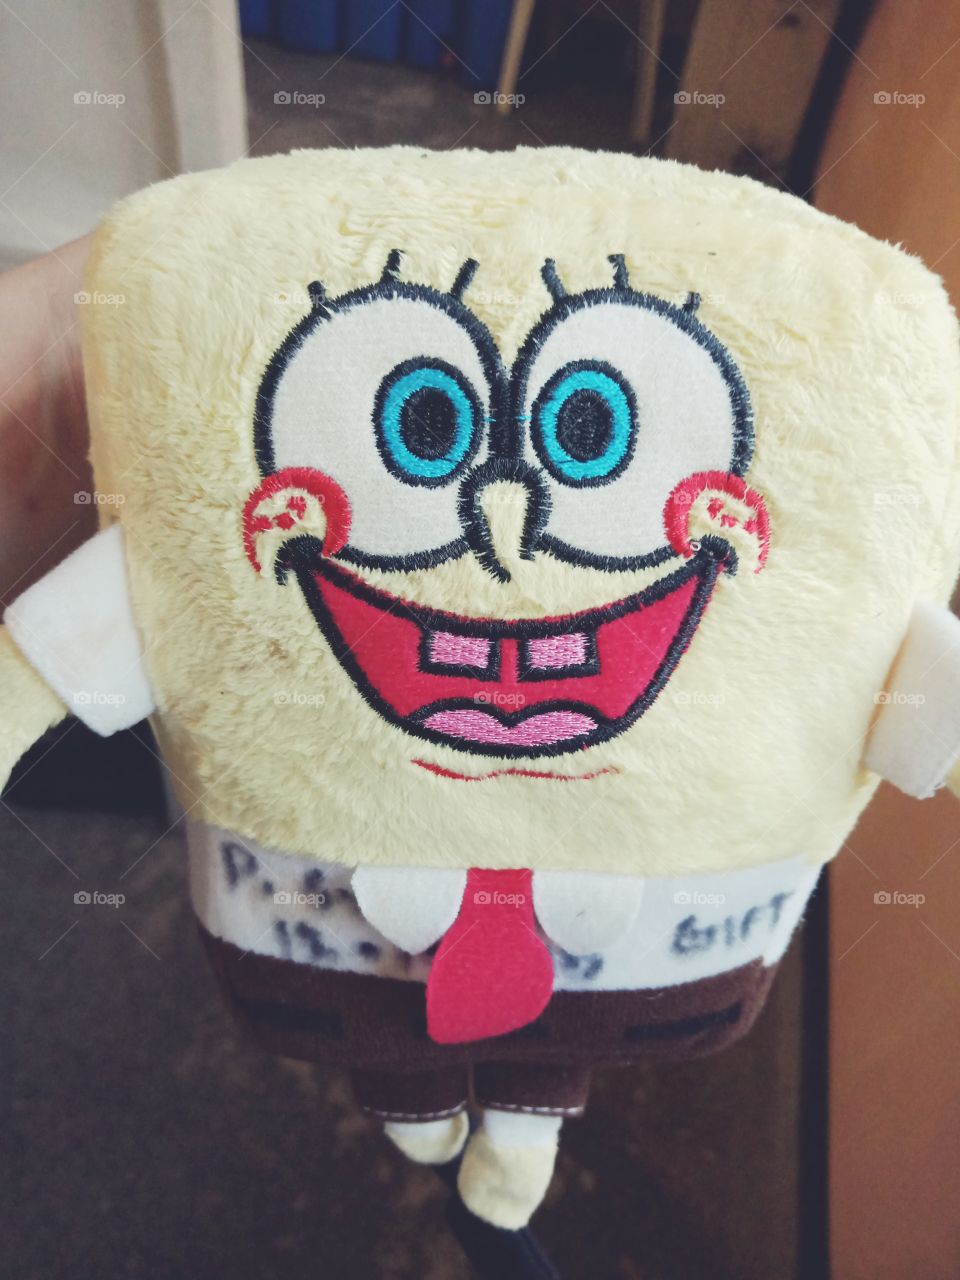 An Intilligent smile for my memorable Sponge Bob gift. 😁